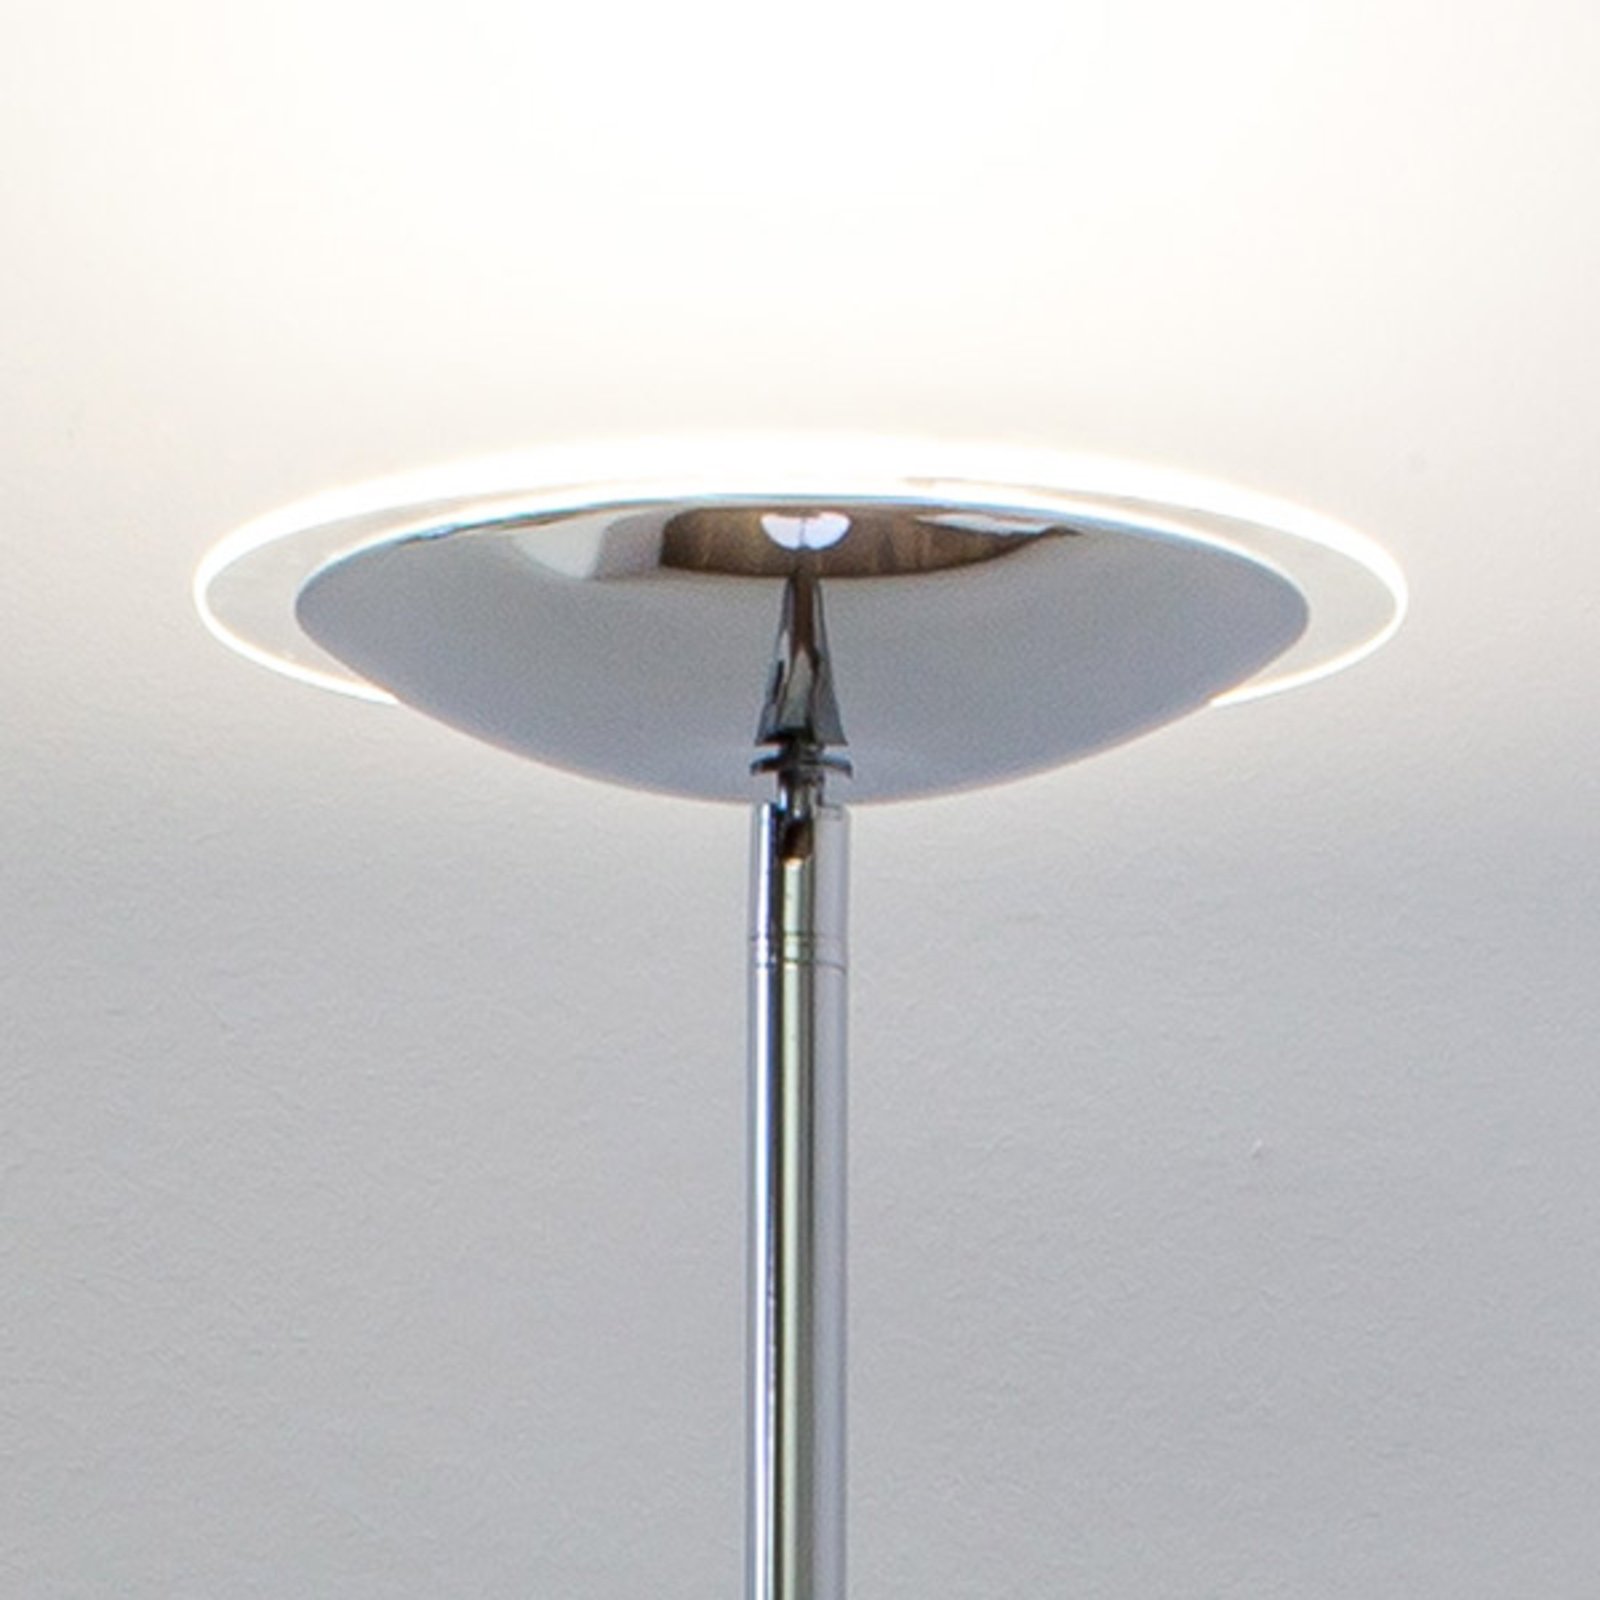 Chroomglanzende LED uplighter vloerlamp Malea